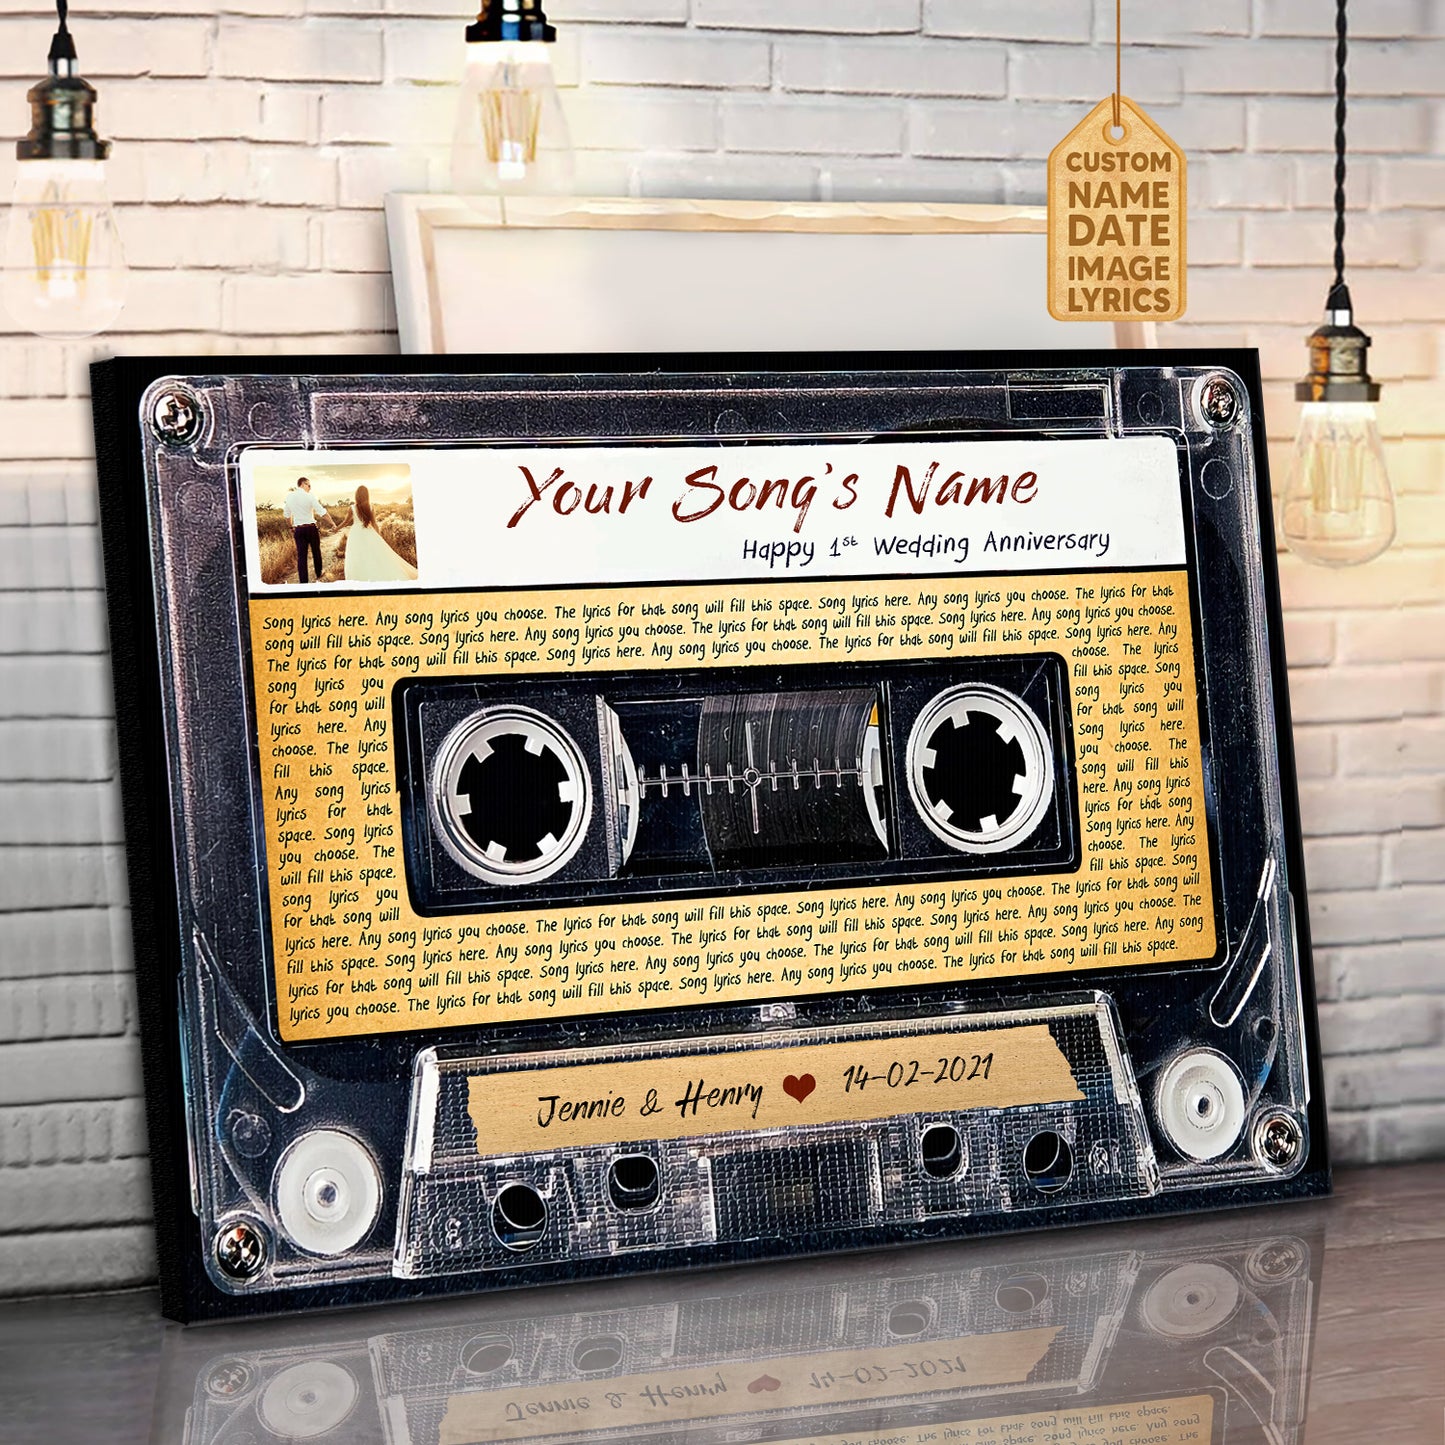 Personalized Song Lyrics Customized Image Music Cassettes Poster